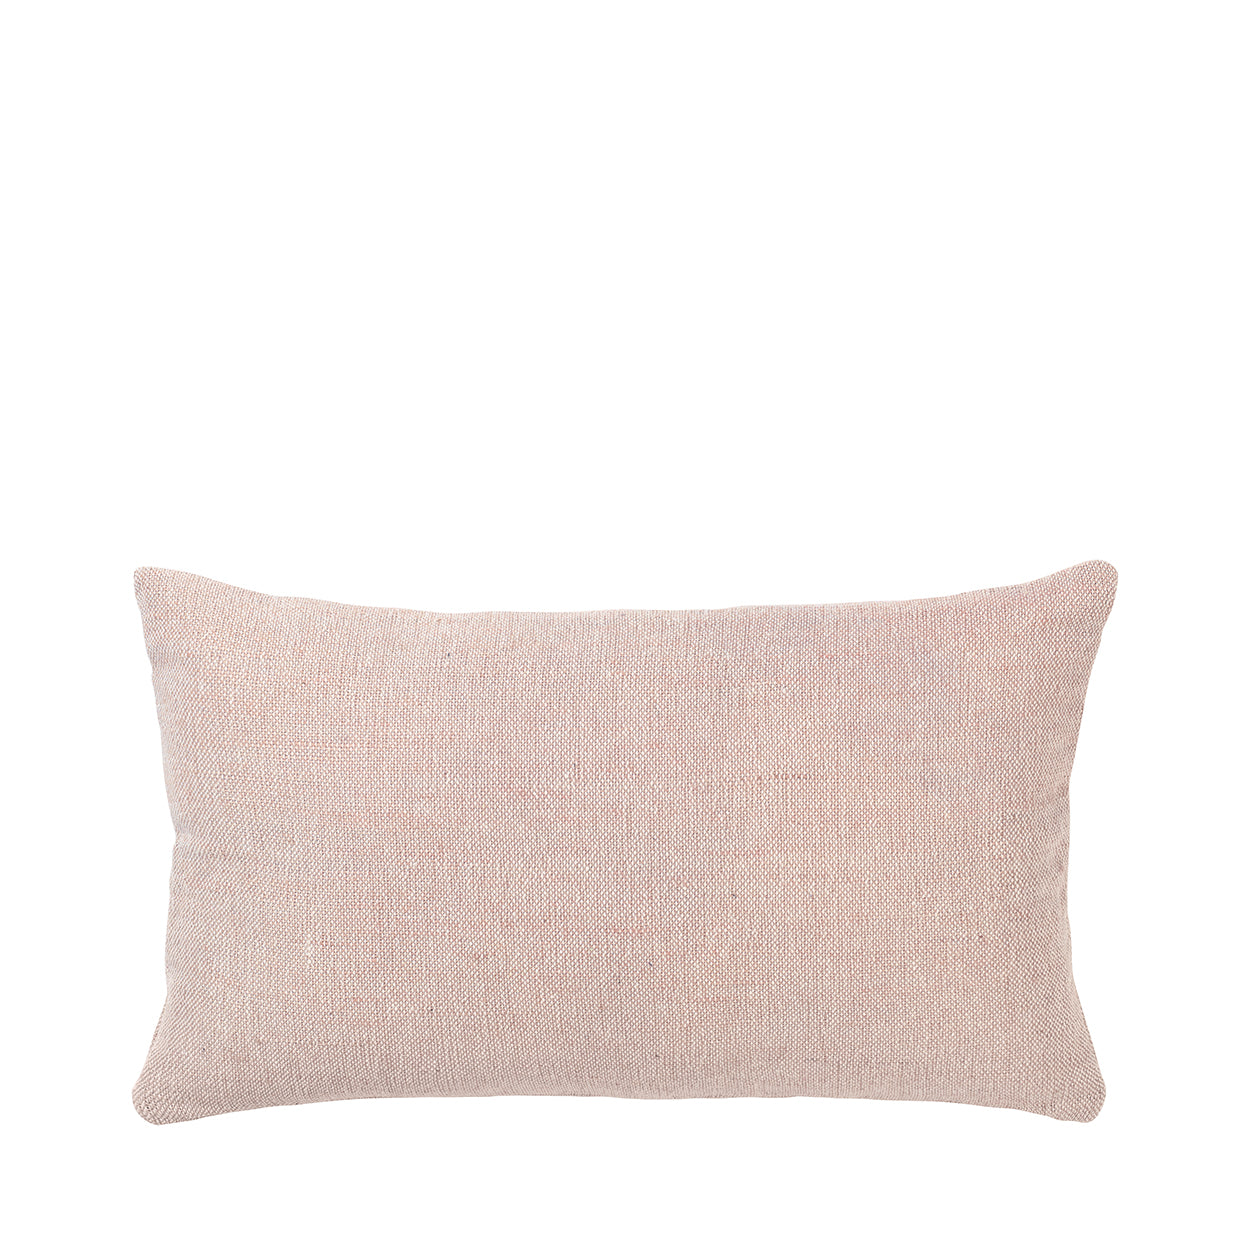 *MATCH Cushion ivory / rose dust MATCH Pillow